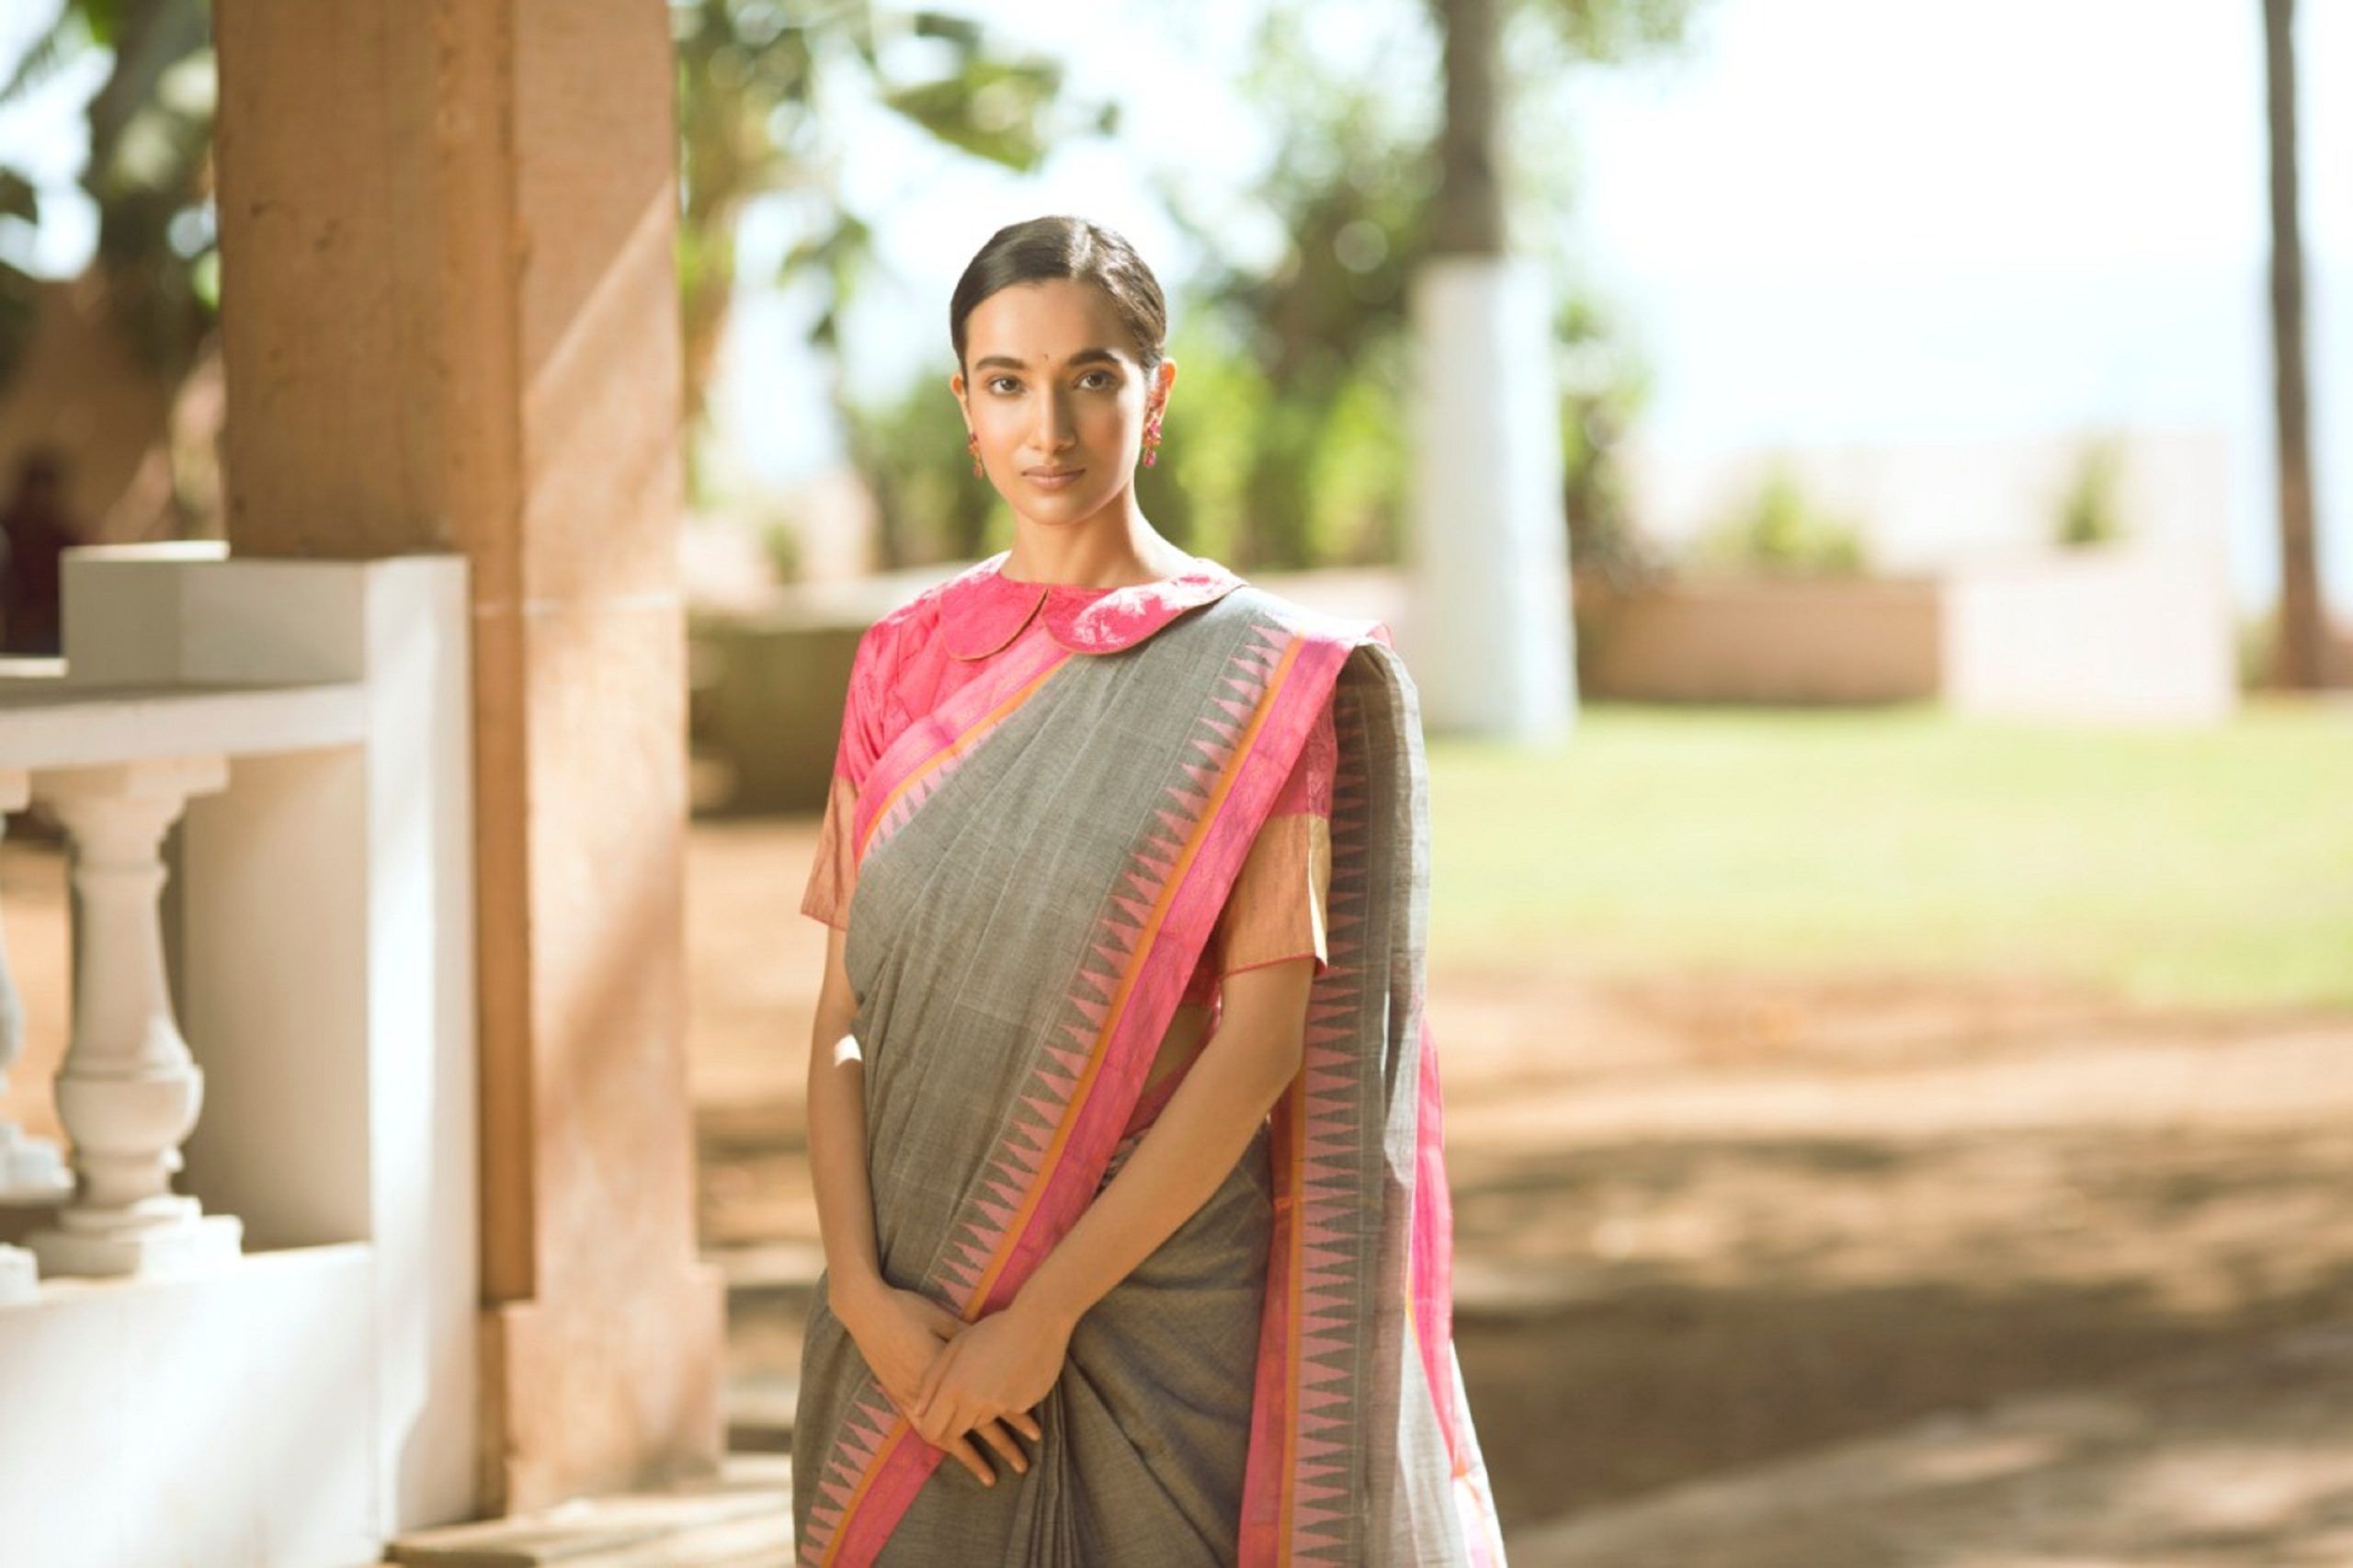 Handloom cotton sari styles for hot summer months